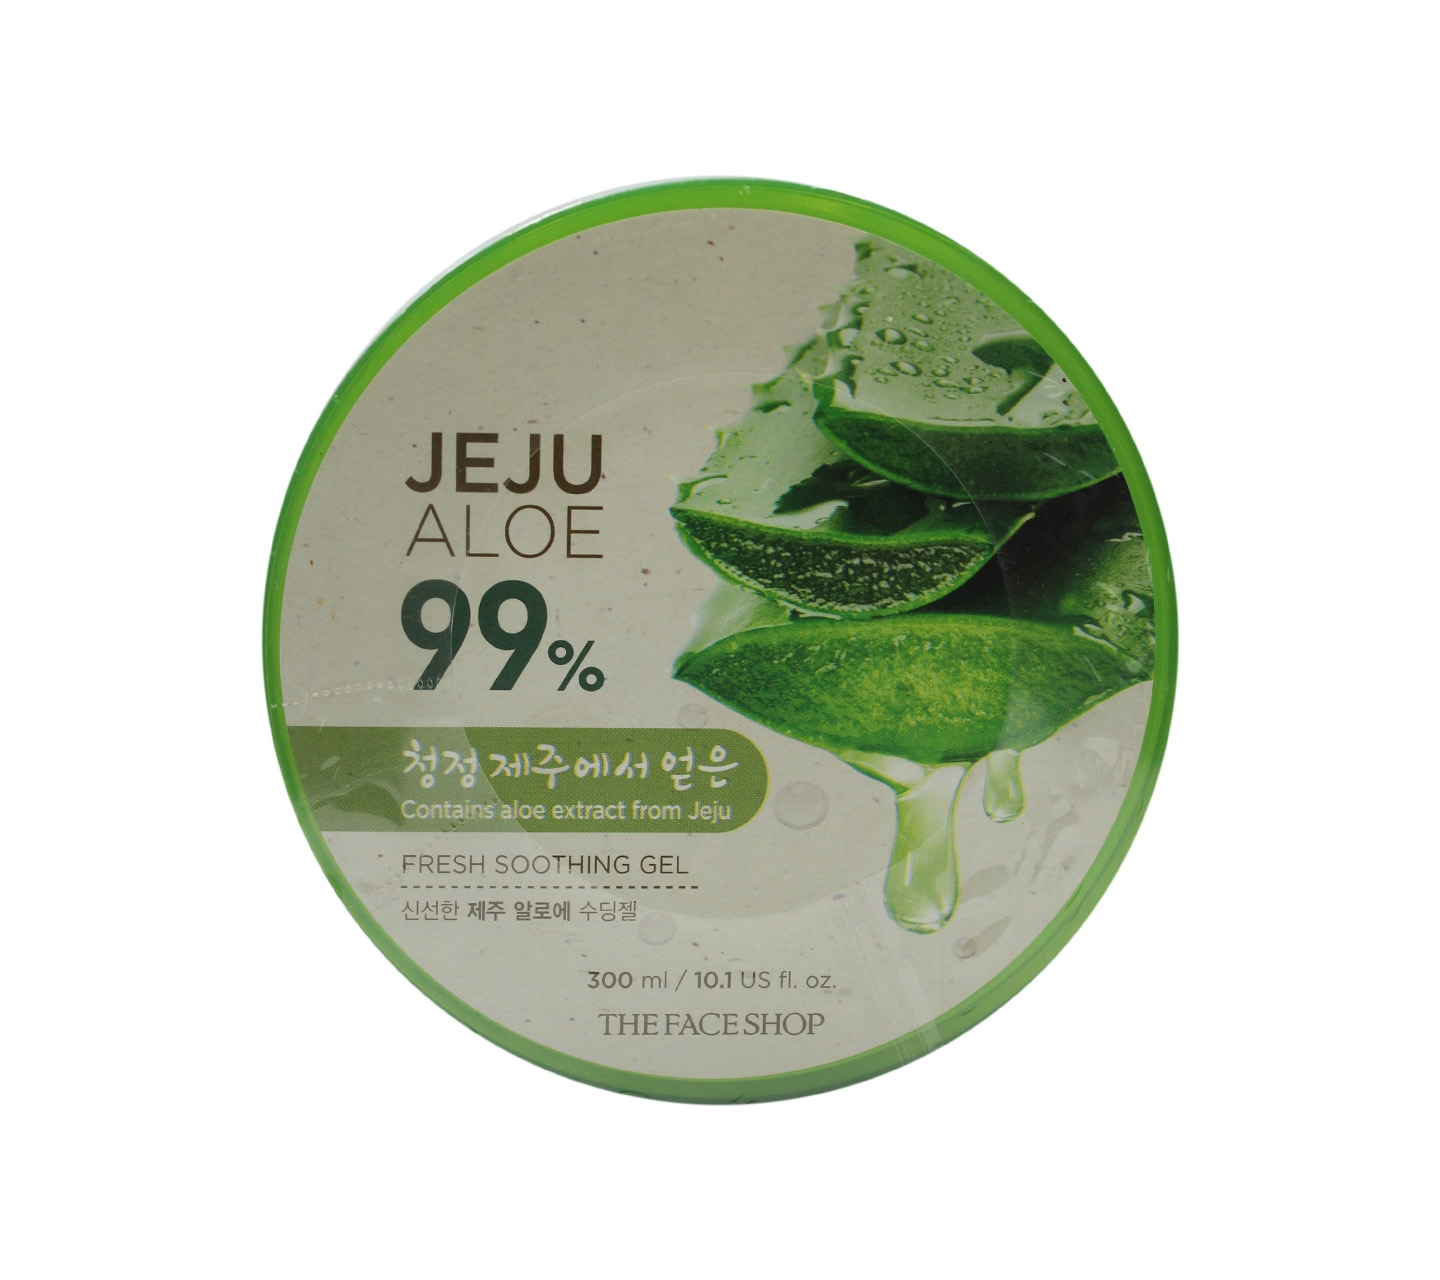 The Face Shop Jeju Aloe 99 % Skin Care 